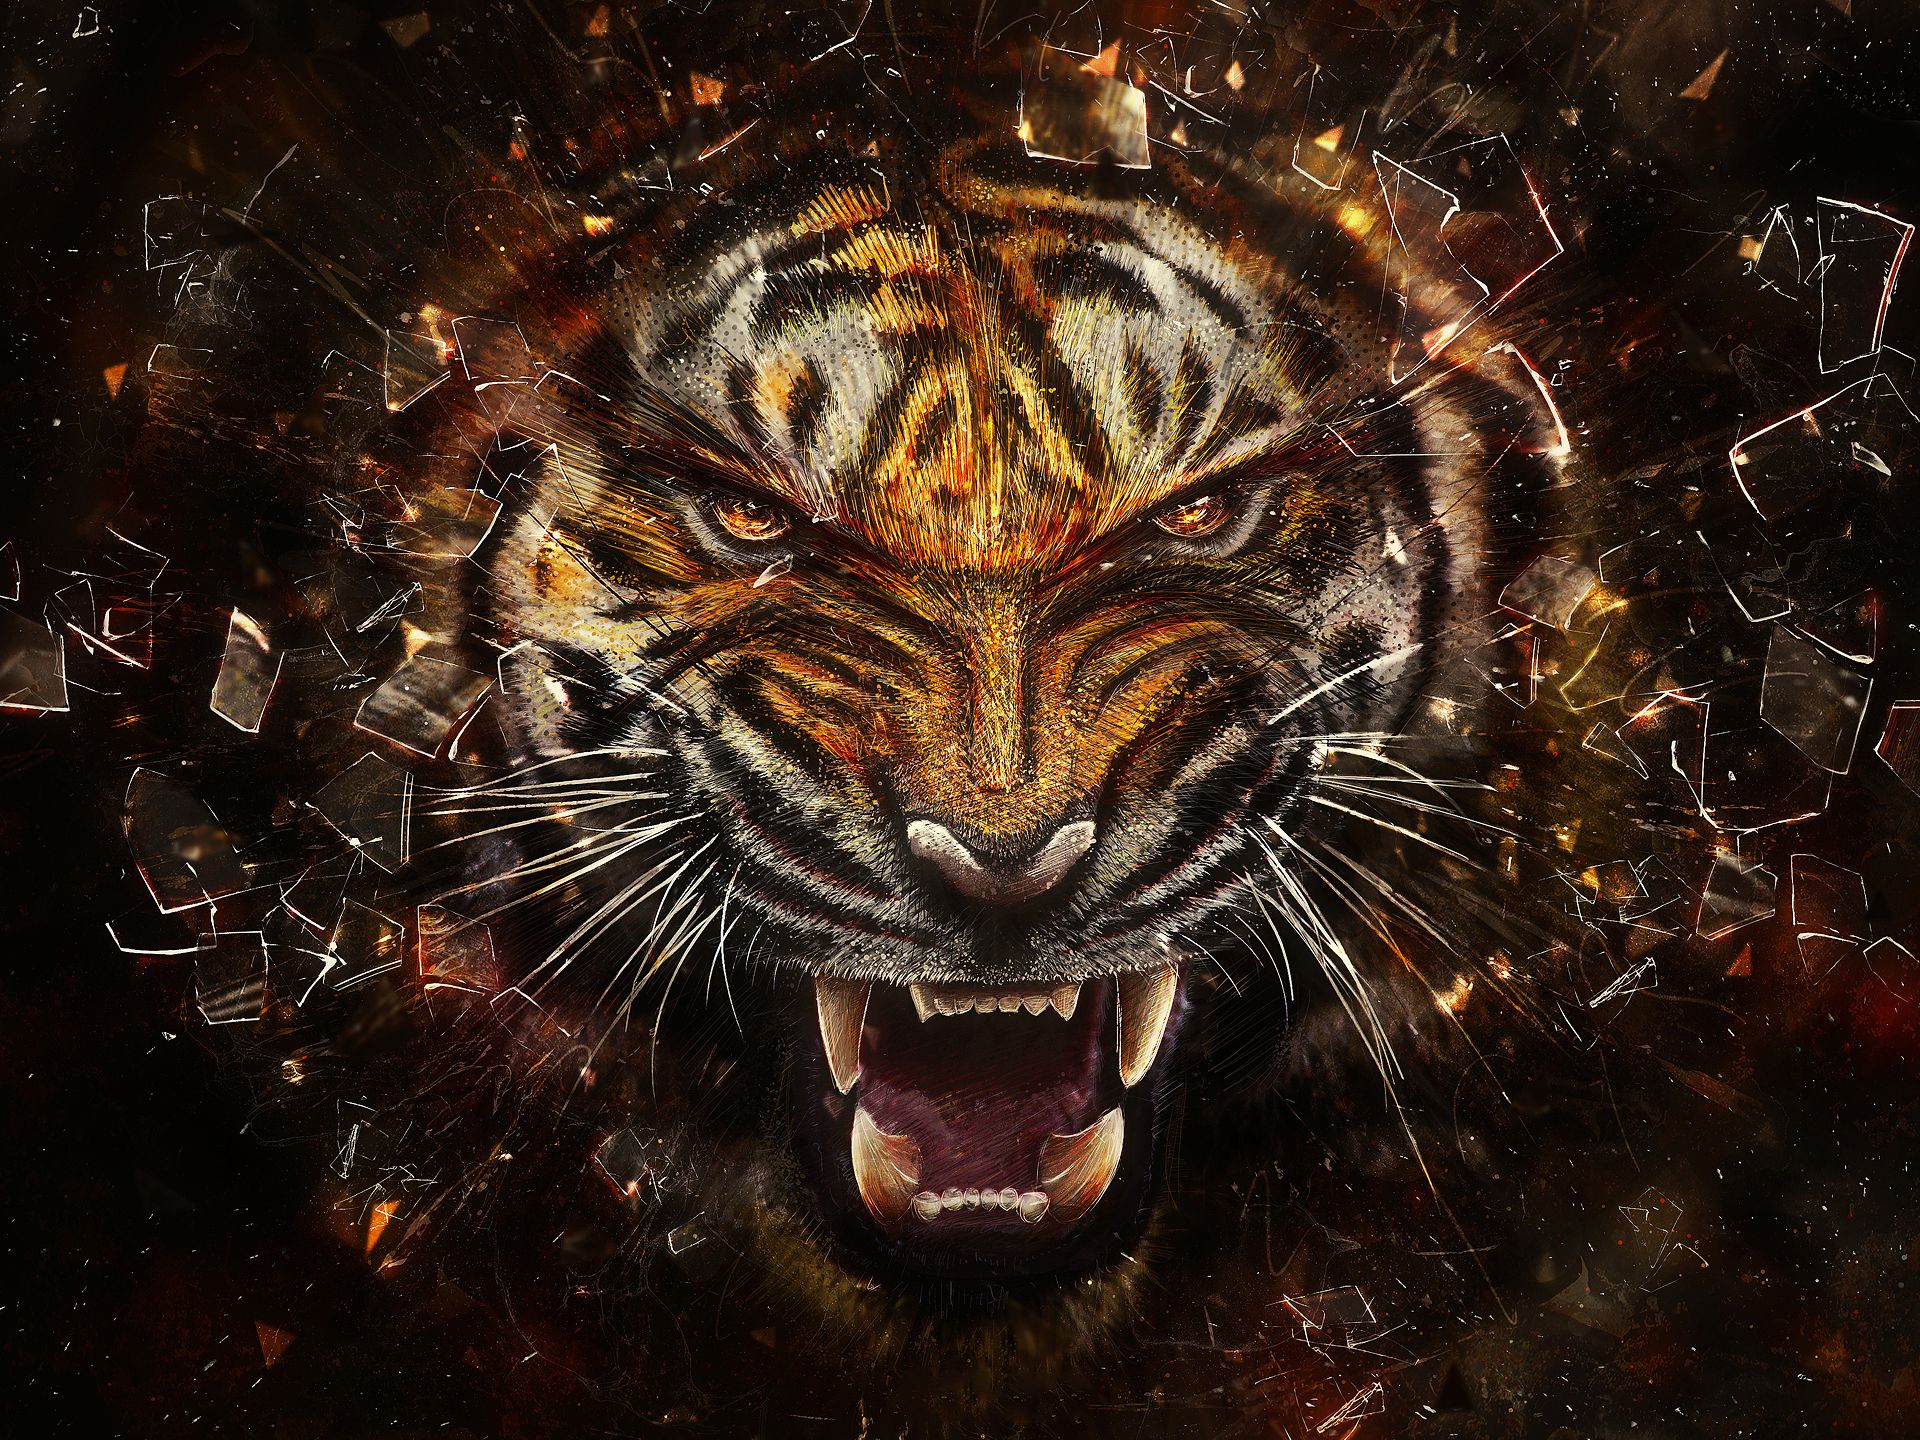 Crazy Tiger Cool Desktop Background Share This